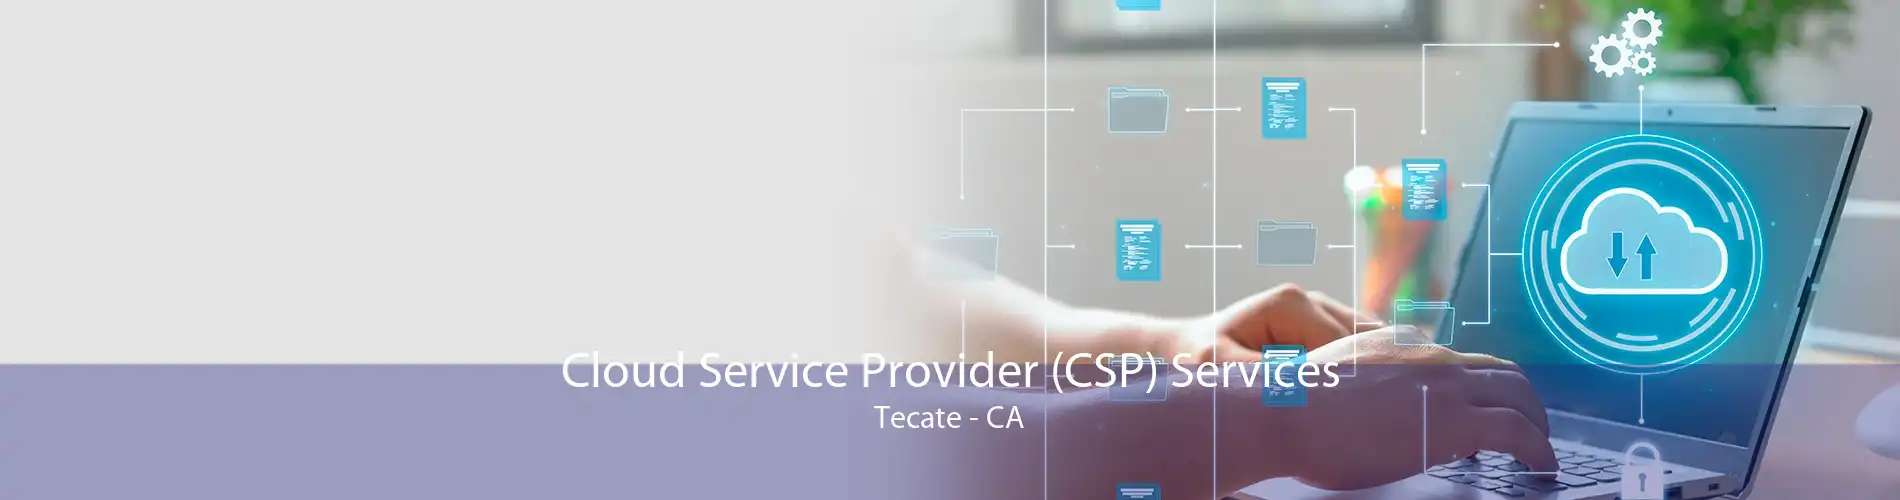 Cloud Service Provider (CSP) Services Tecate - CA